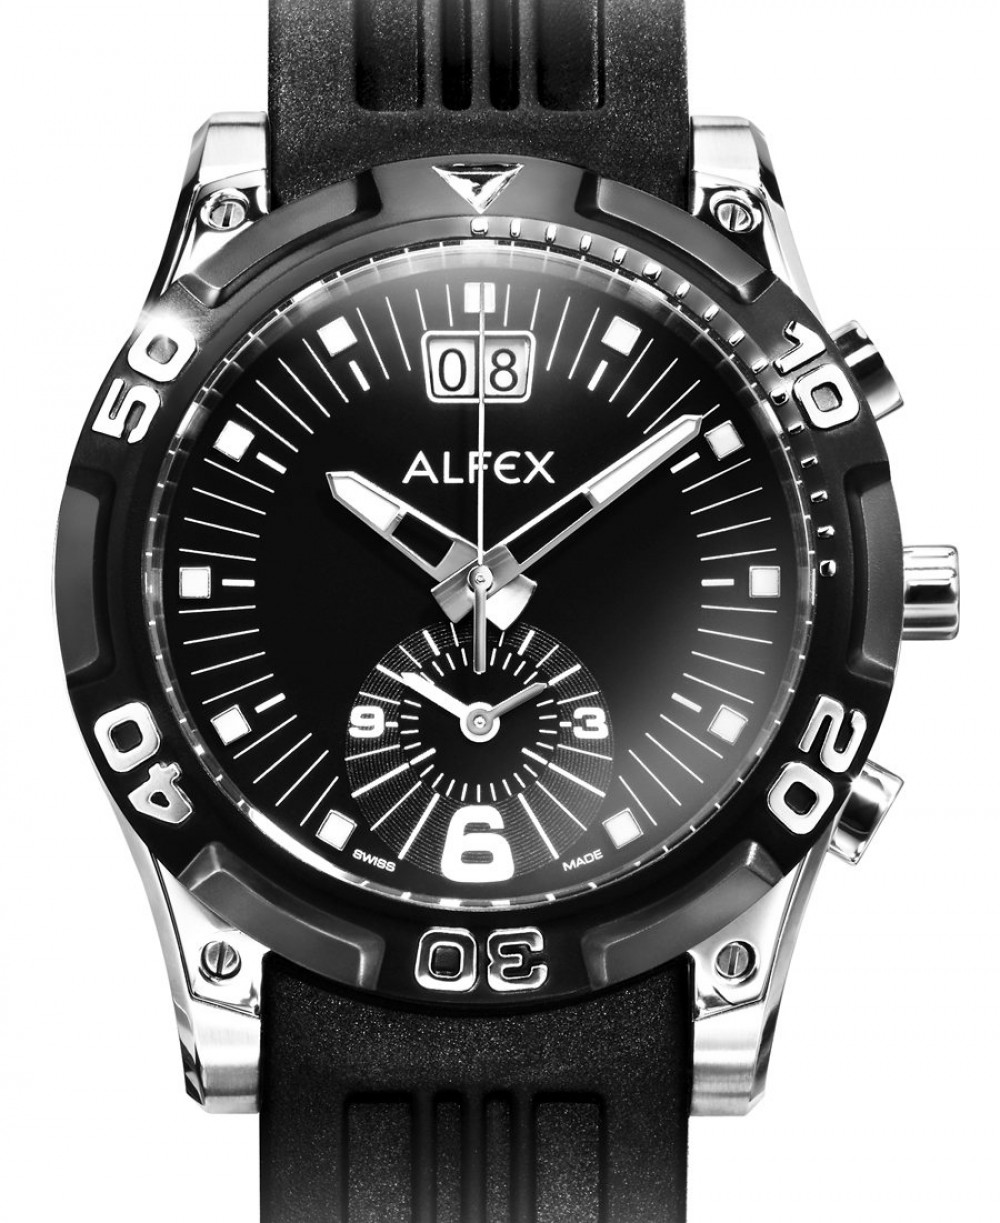 Zegarek firmy Alfex, model Aquatec